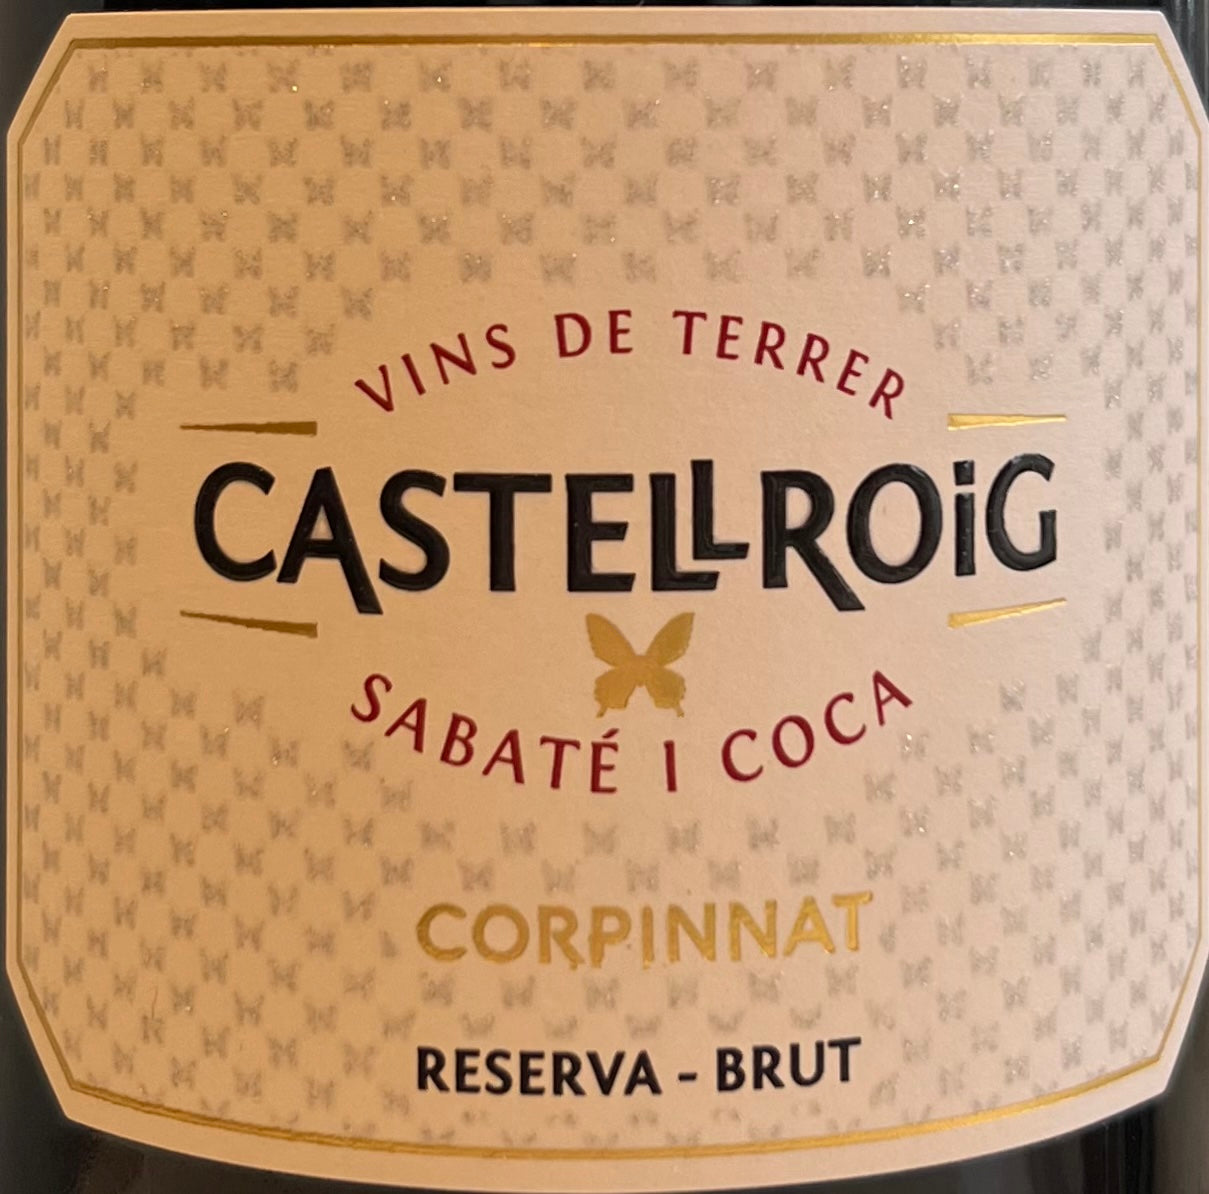 Castellroig 'Corpinnat' Reserva Brut